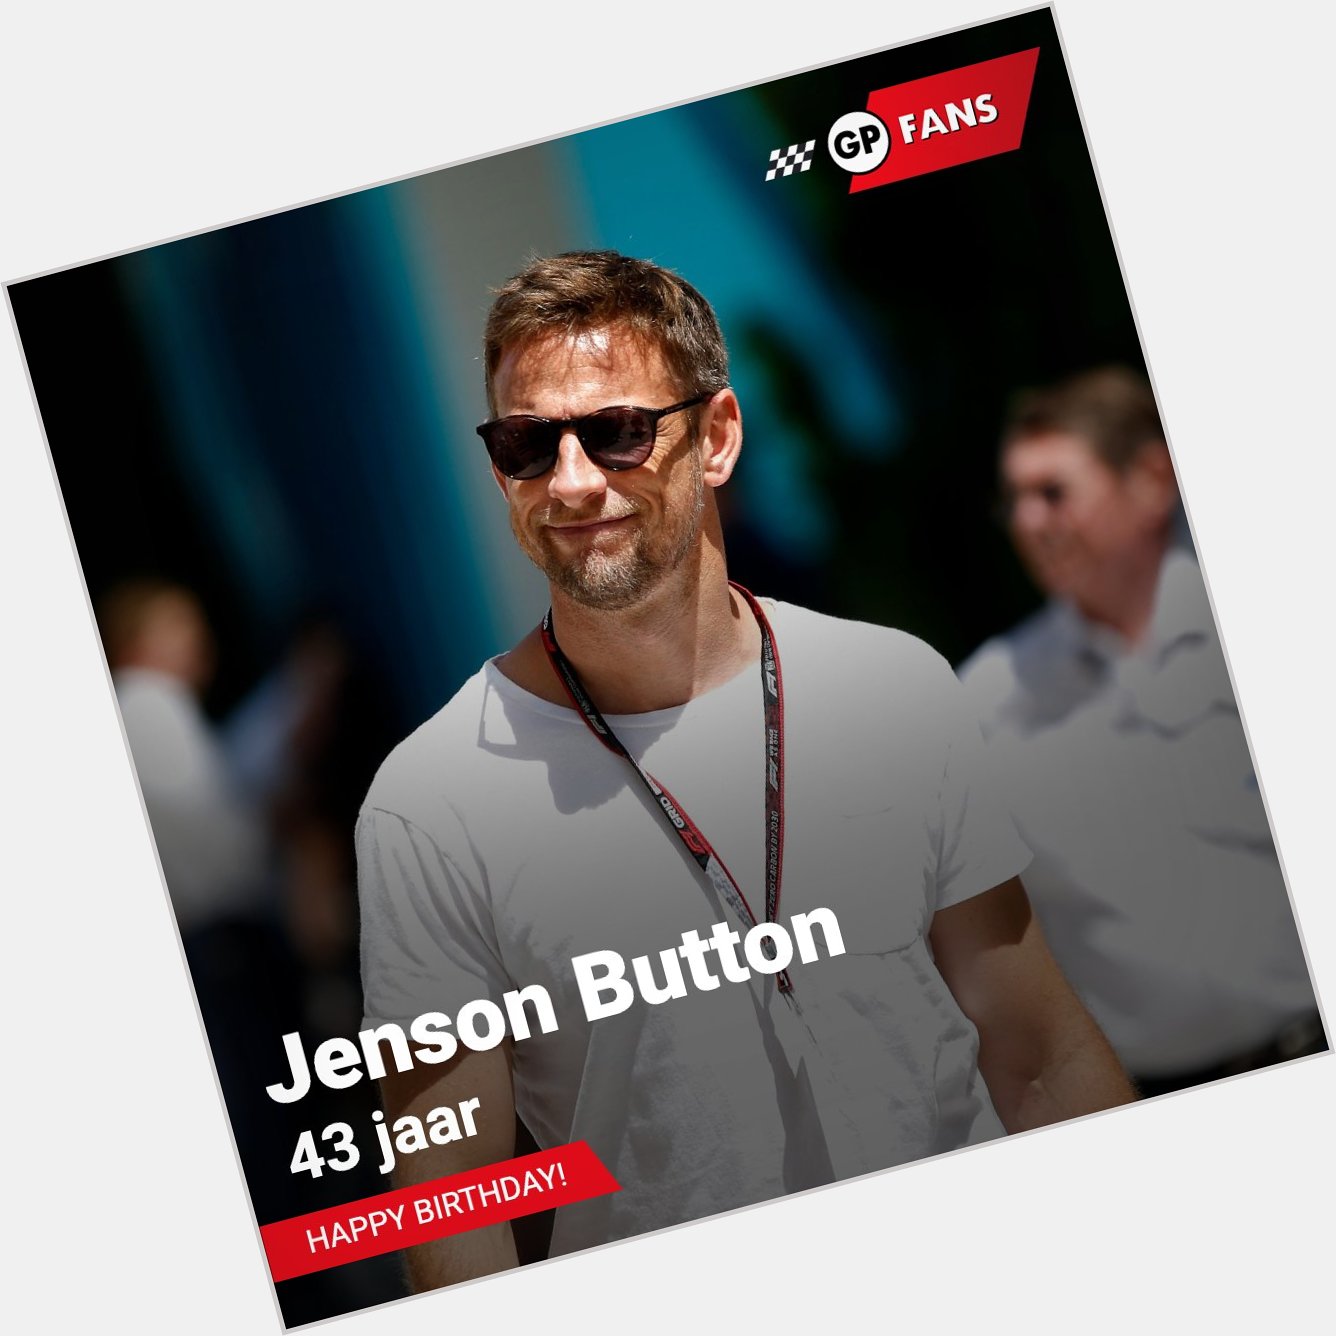 Jenson Button viert vandaag zijn 43ste verjaardag.
Happy Birthday Jenson Button     